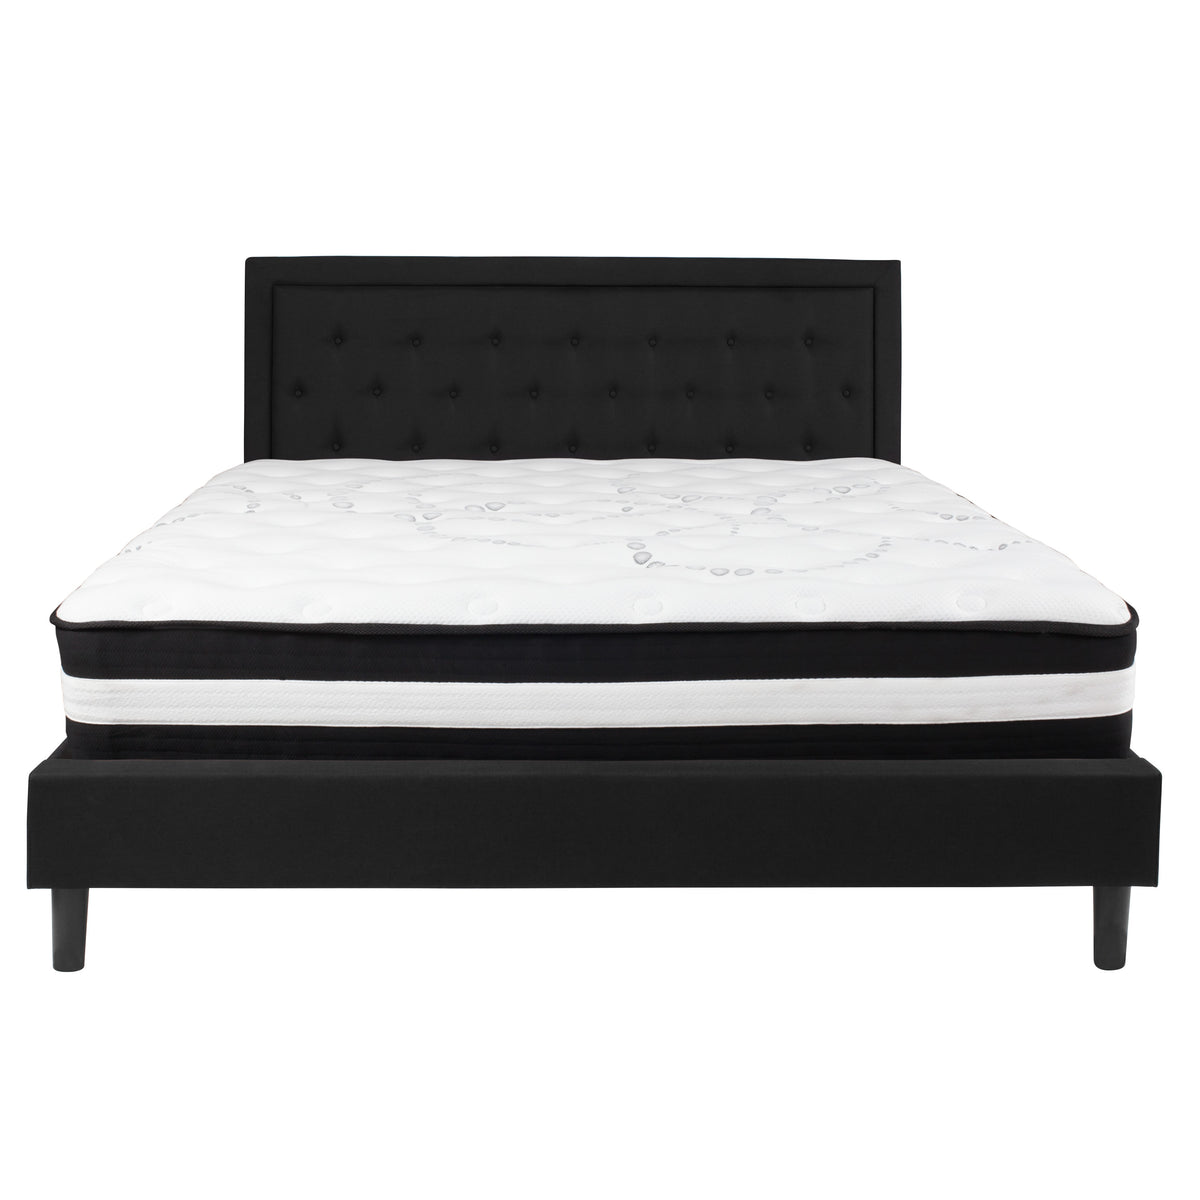 Black,King |#| King Size Panel Tufted Black Fabric Platform Bed with Pocket Spring Mattress